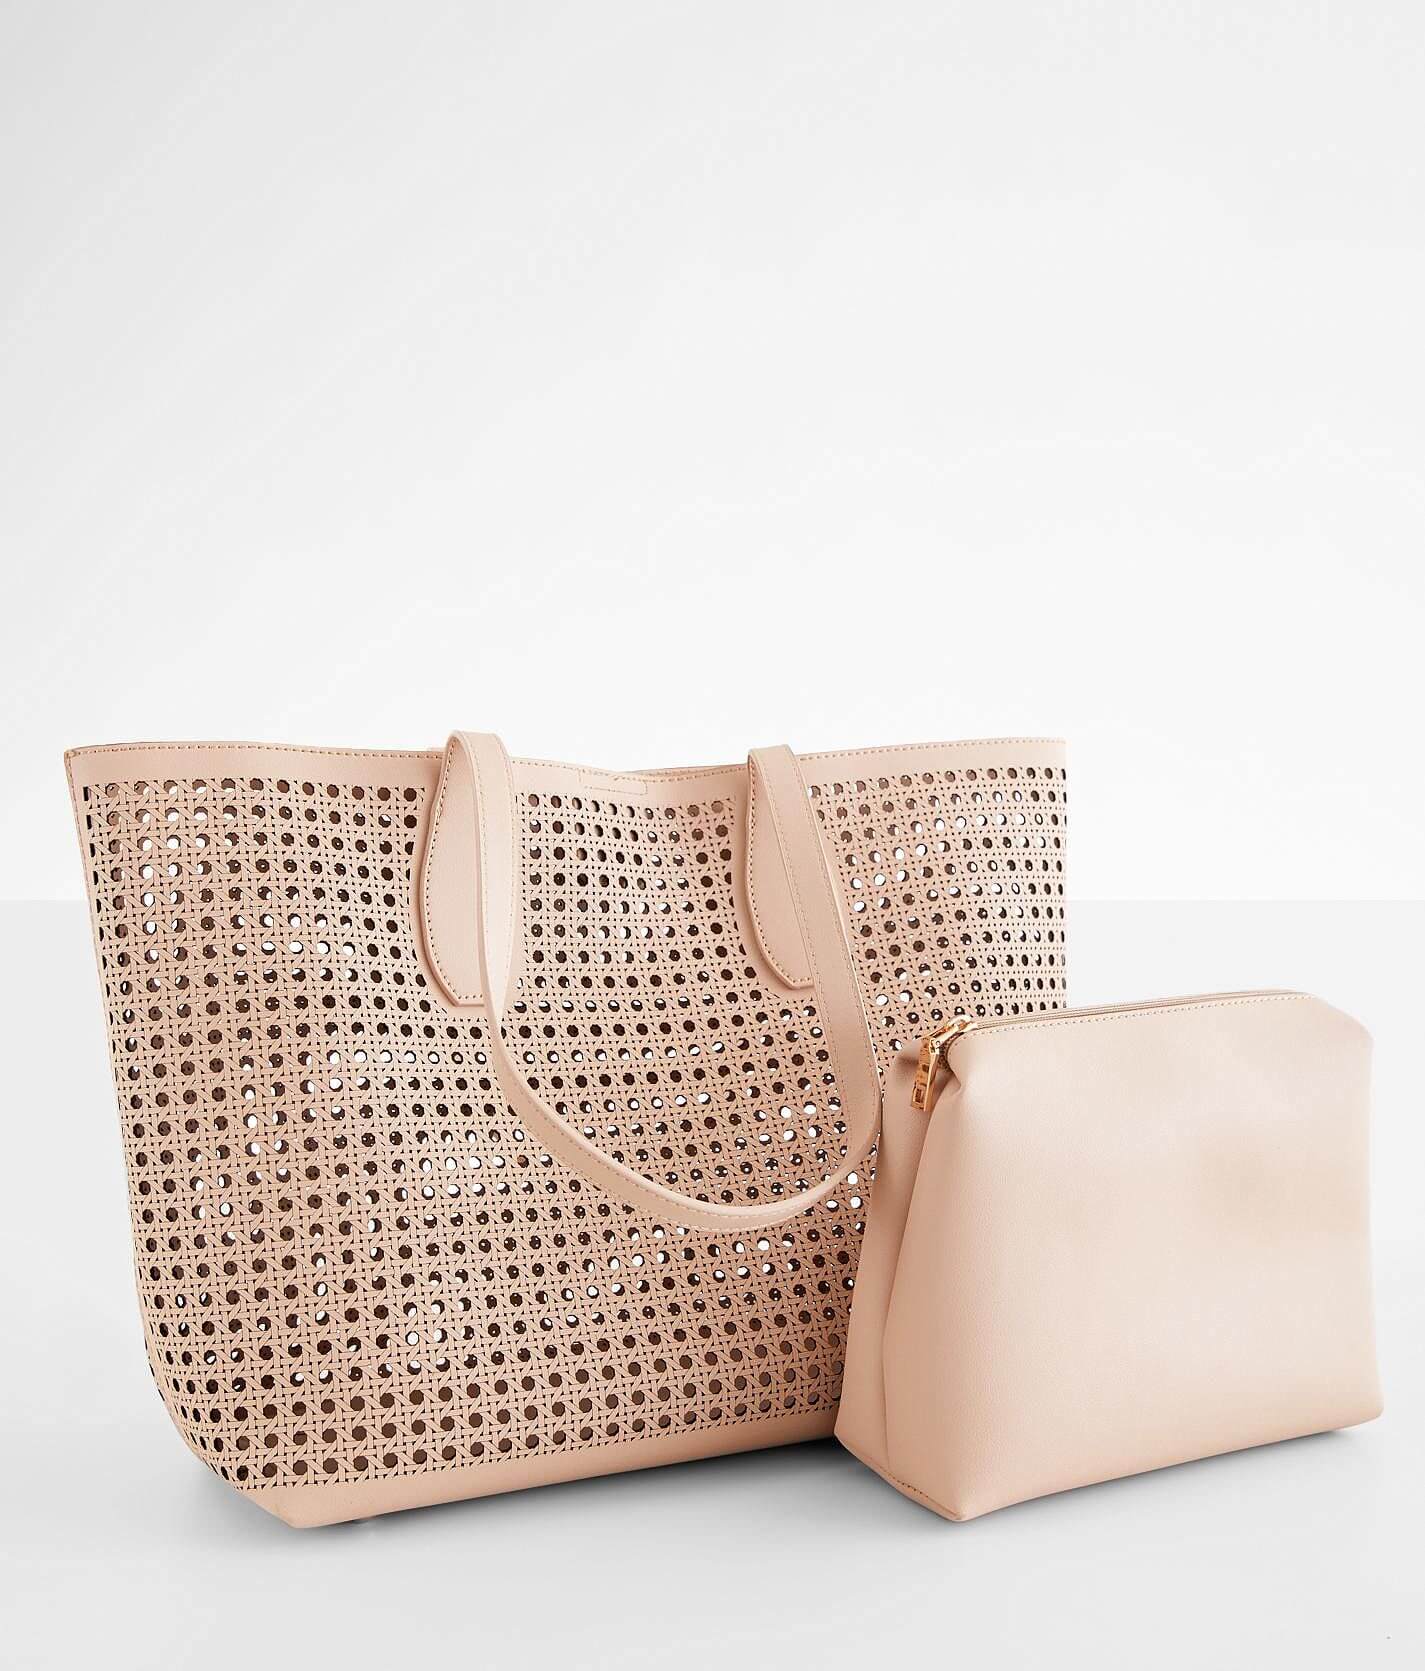 Moda Luxe Tote Bag - $30 - From miranda